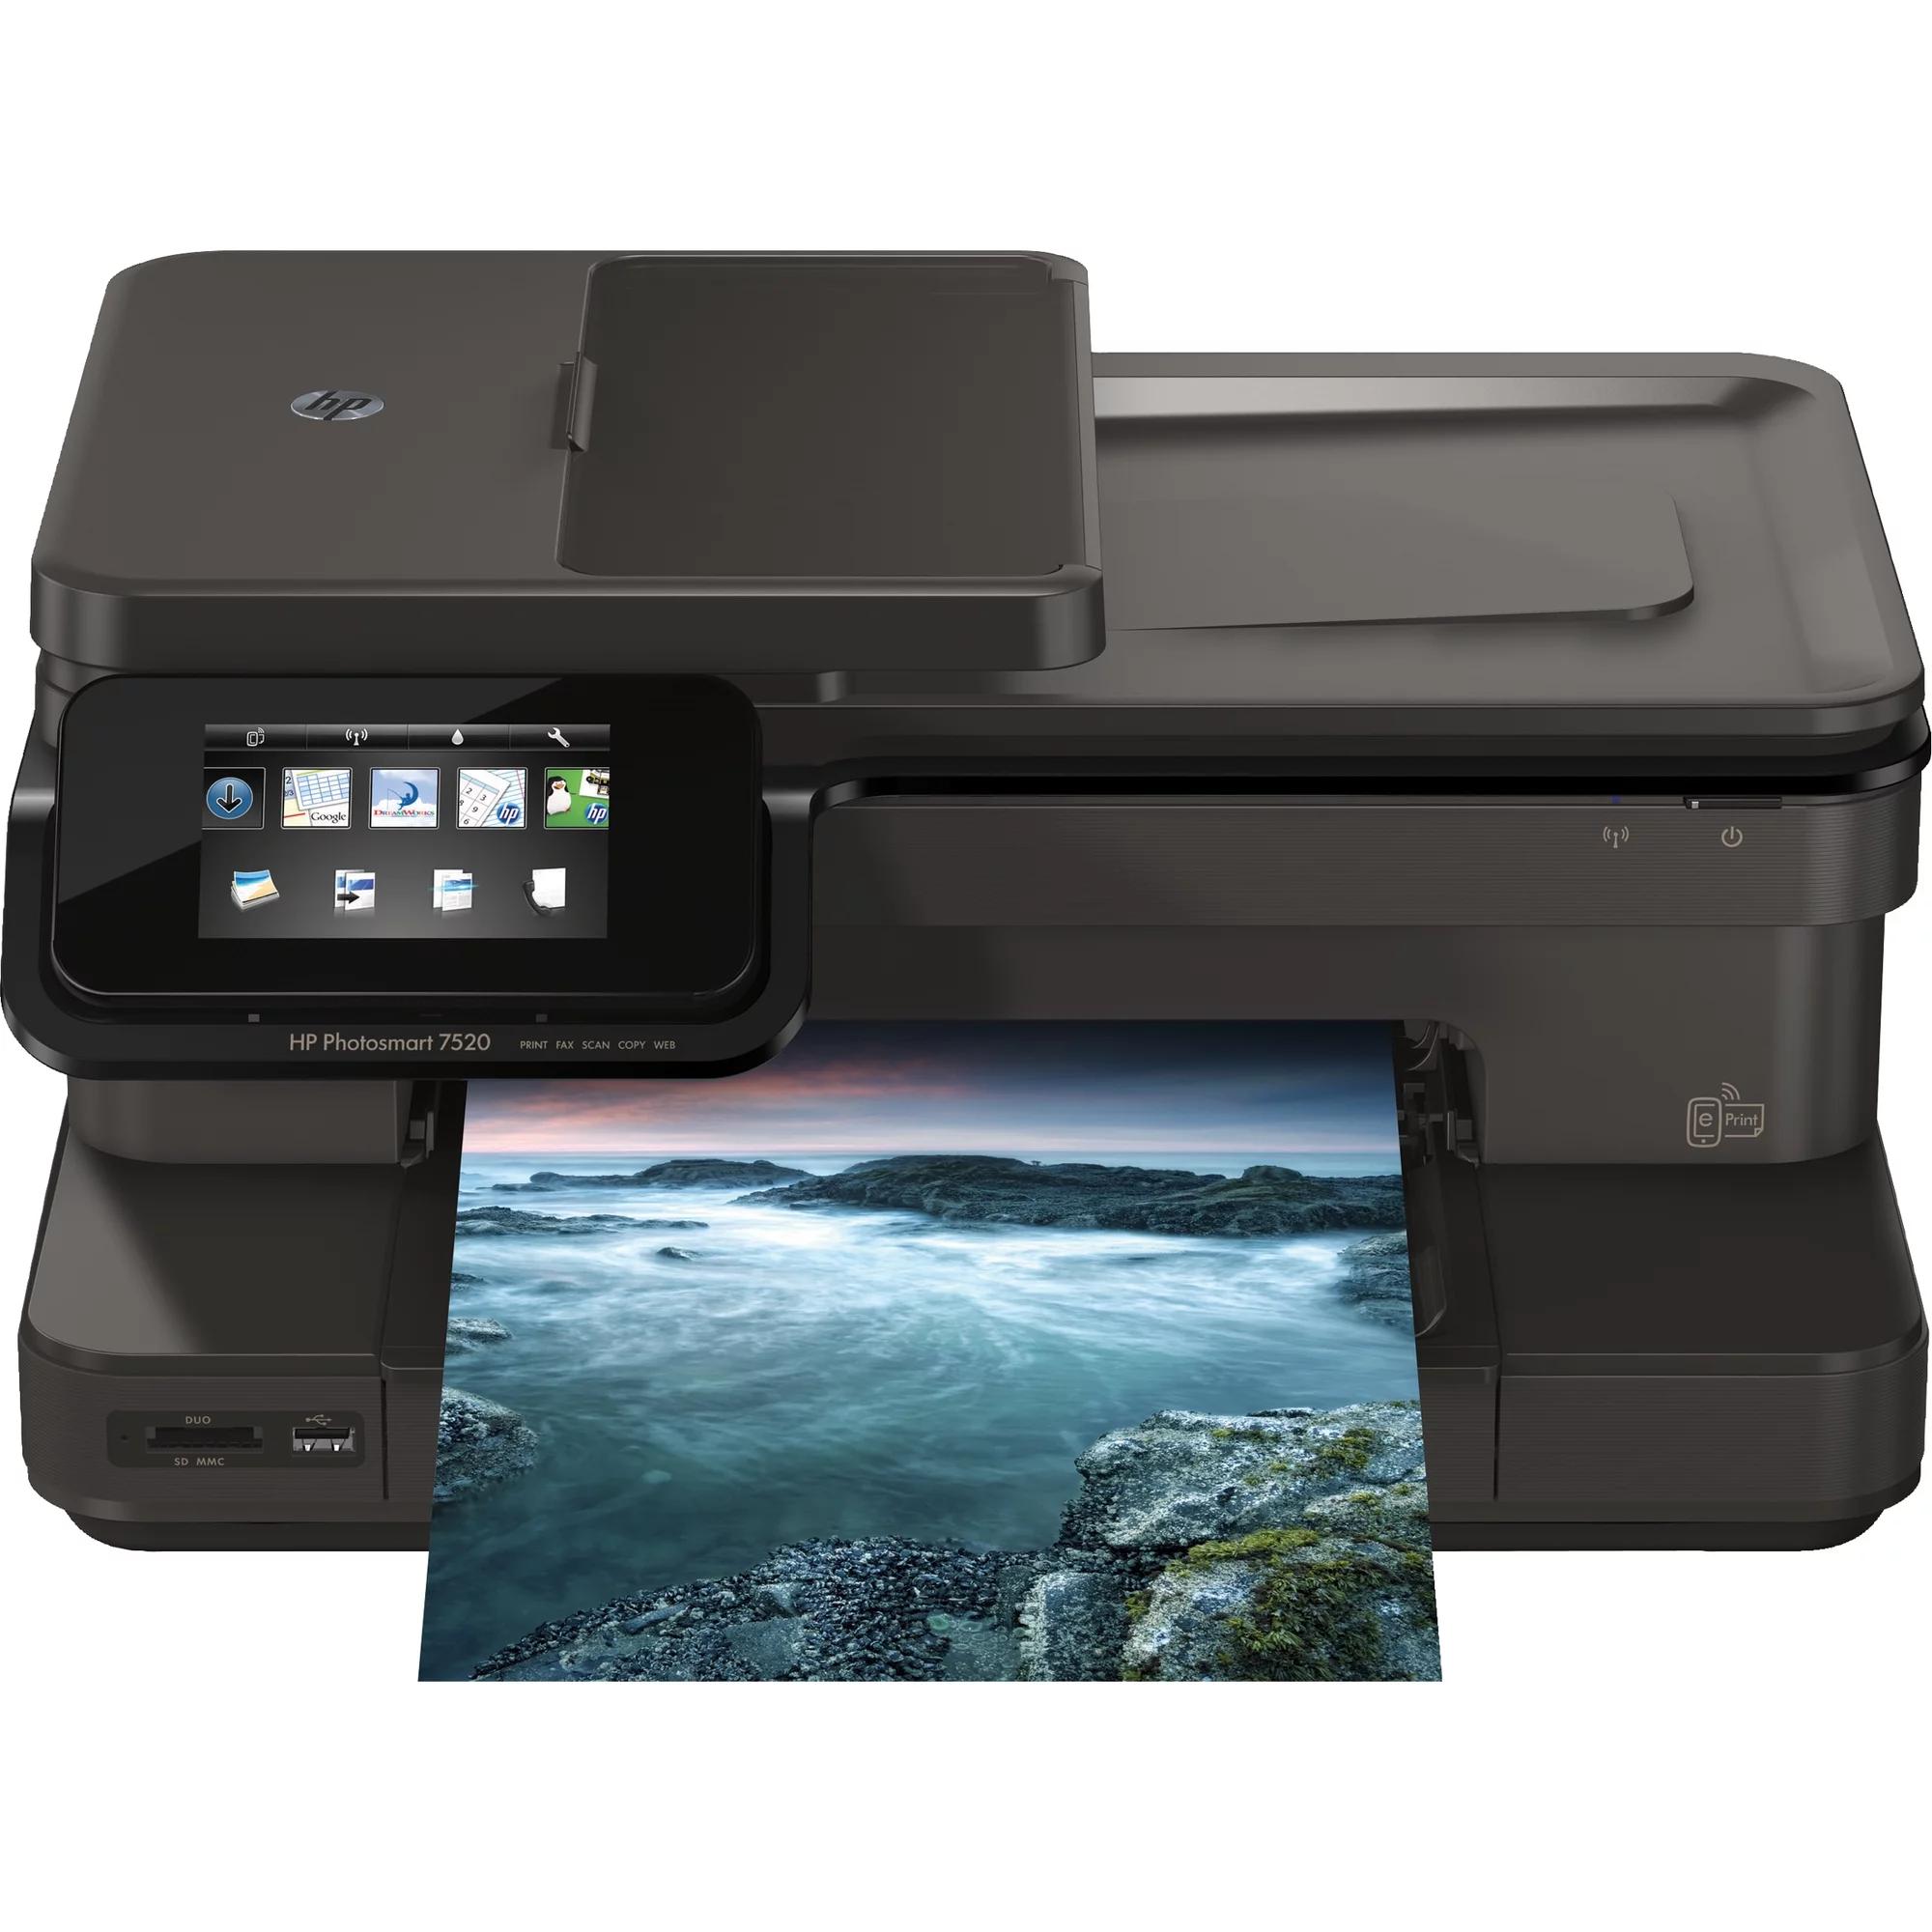 Hp photosmart d5160 inkjet printer q7091a: fast & high-quality printing